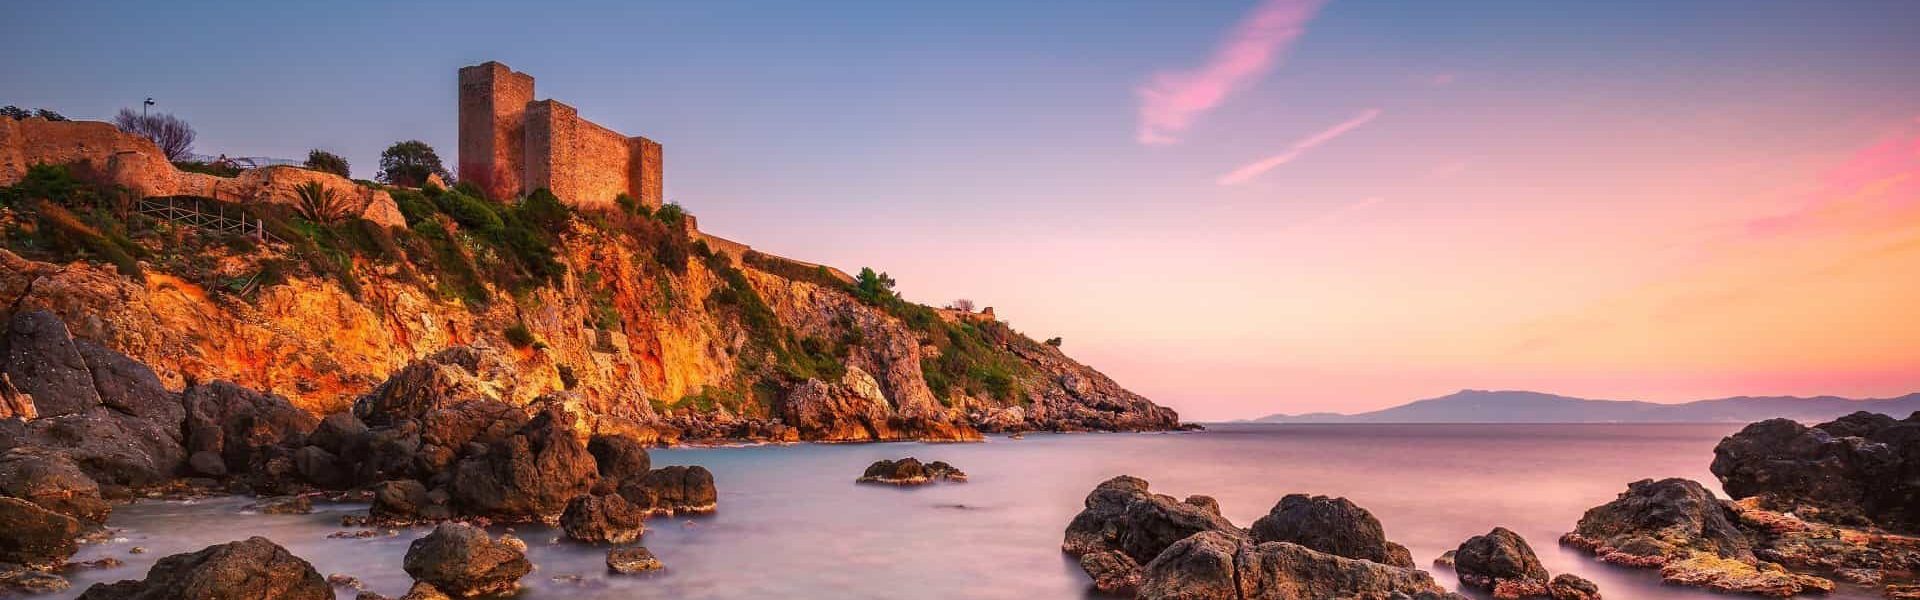 Talamone rock beach medieval fortress  sunset. Maremma Argentario, Tuscany, Italy